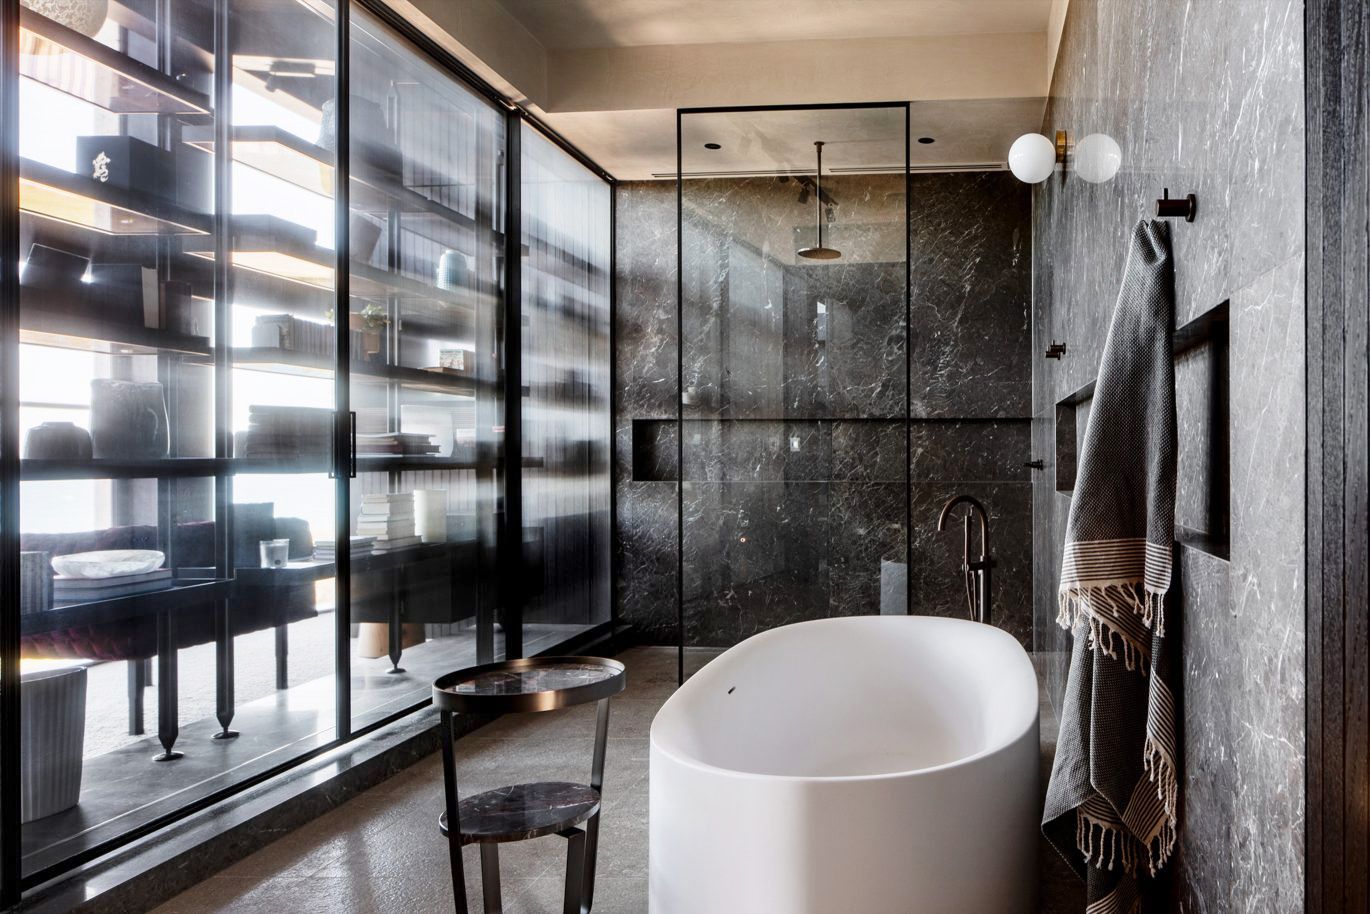 Black Bathroom Fixtures and Decor Keeping Modern Bathroom Design Elegant